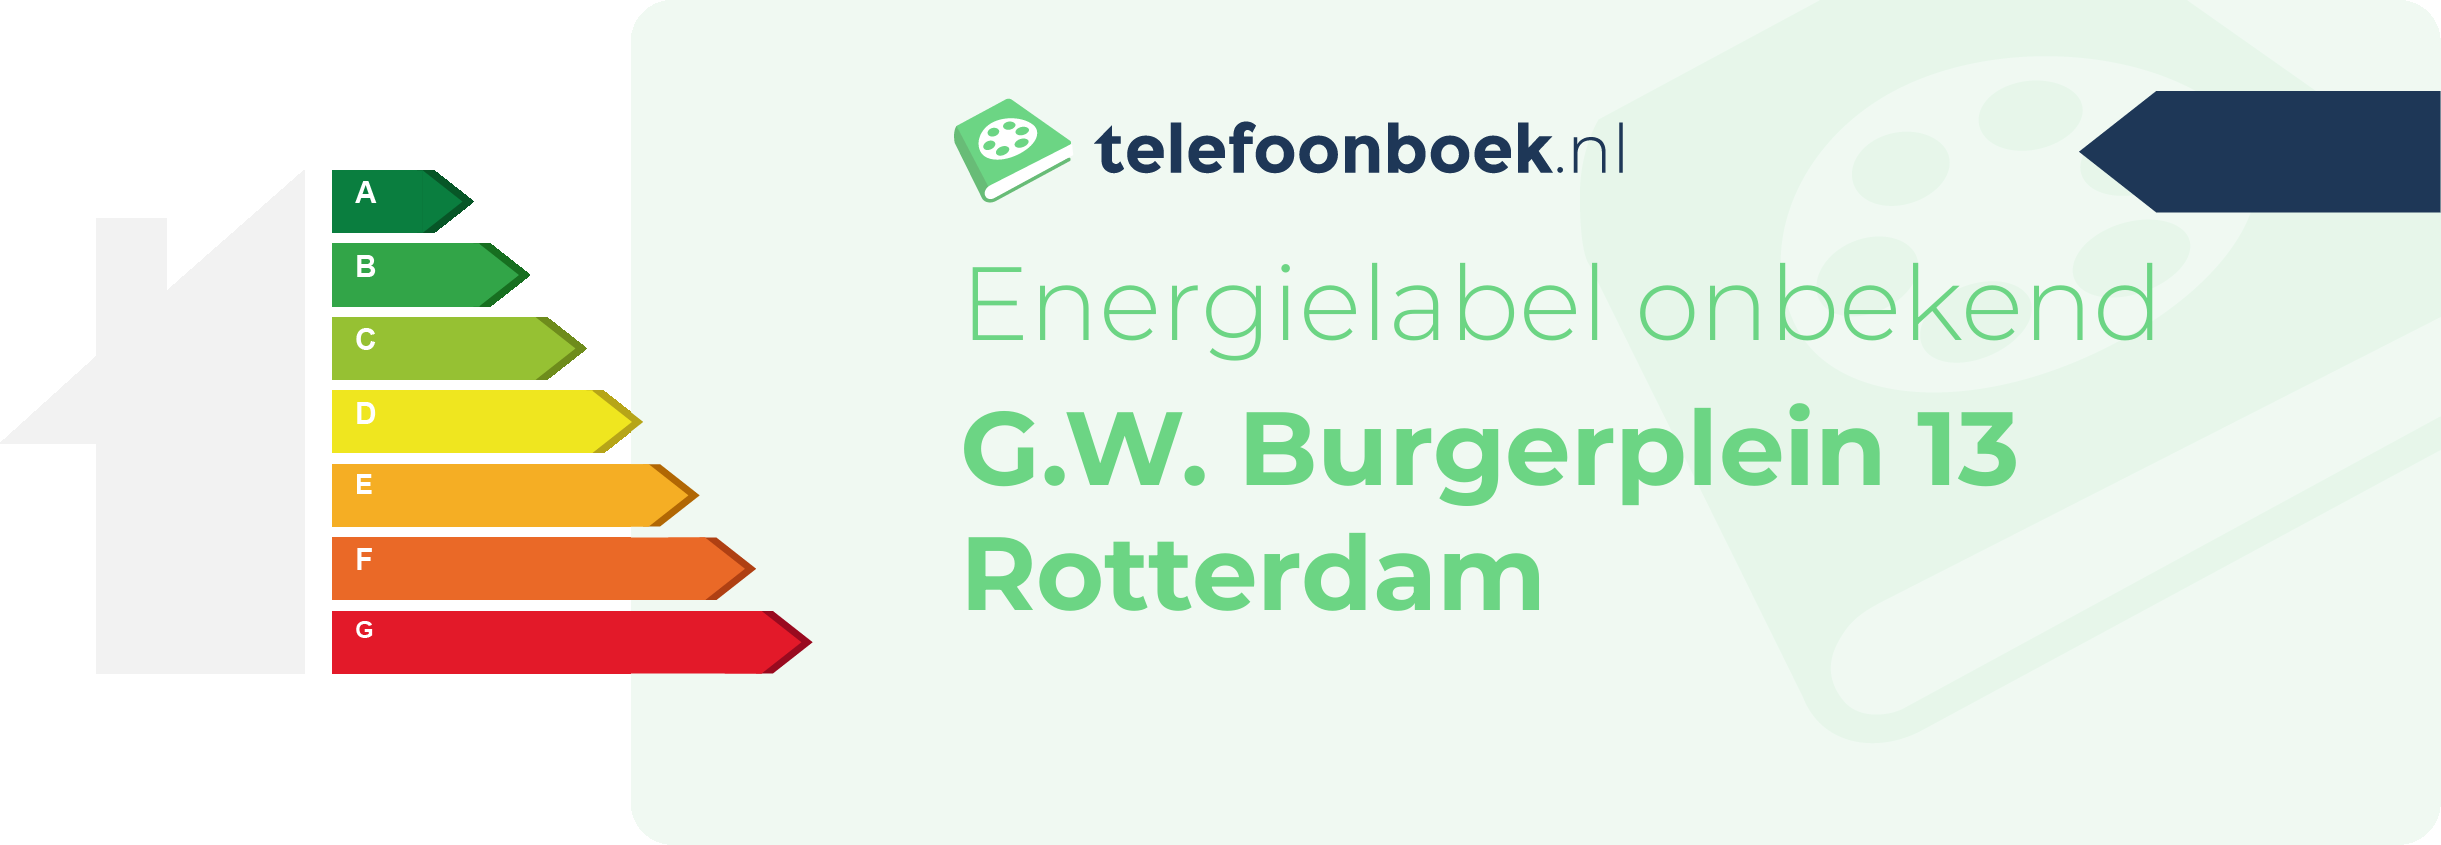 Energielabel G.W. Burgerplein 13 Rotterdam